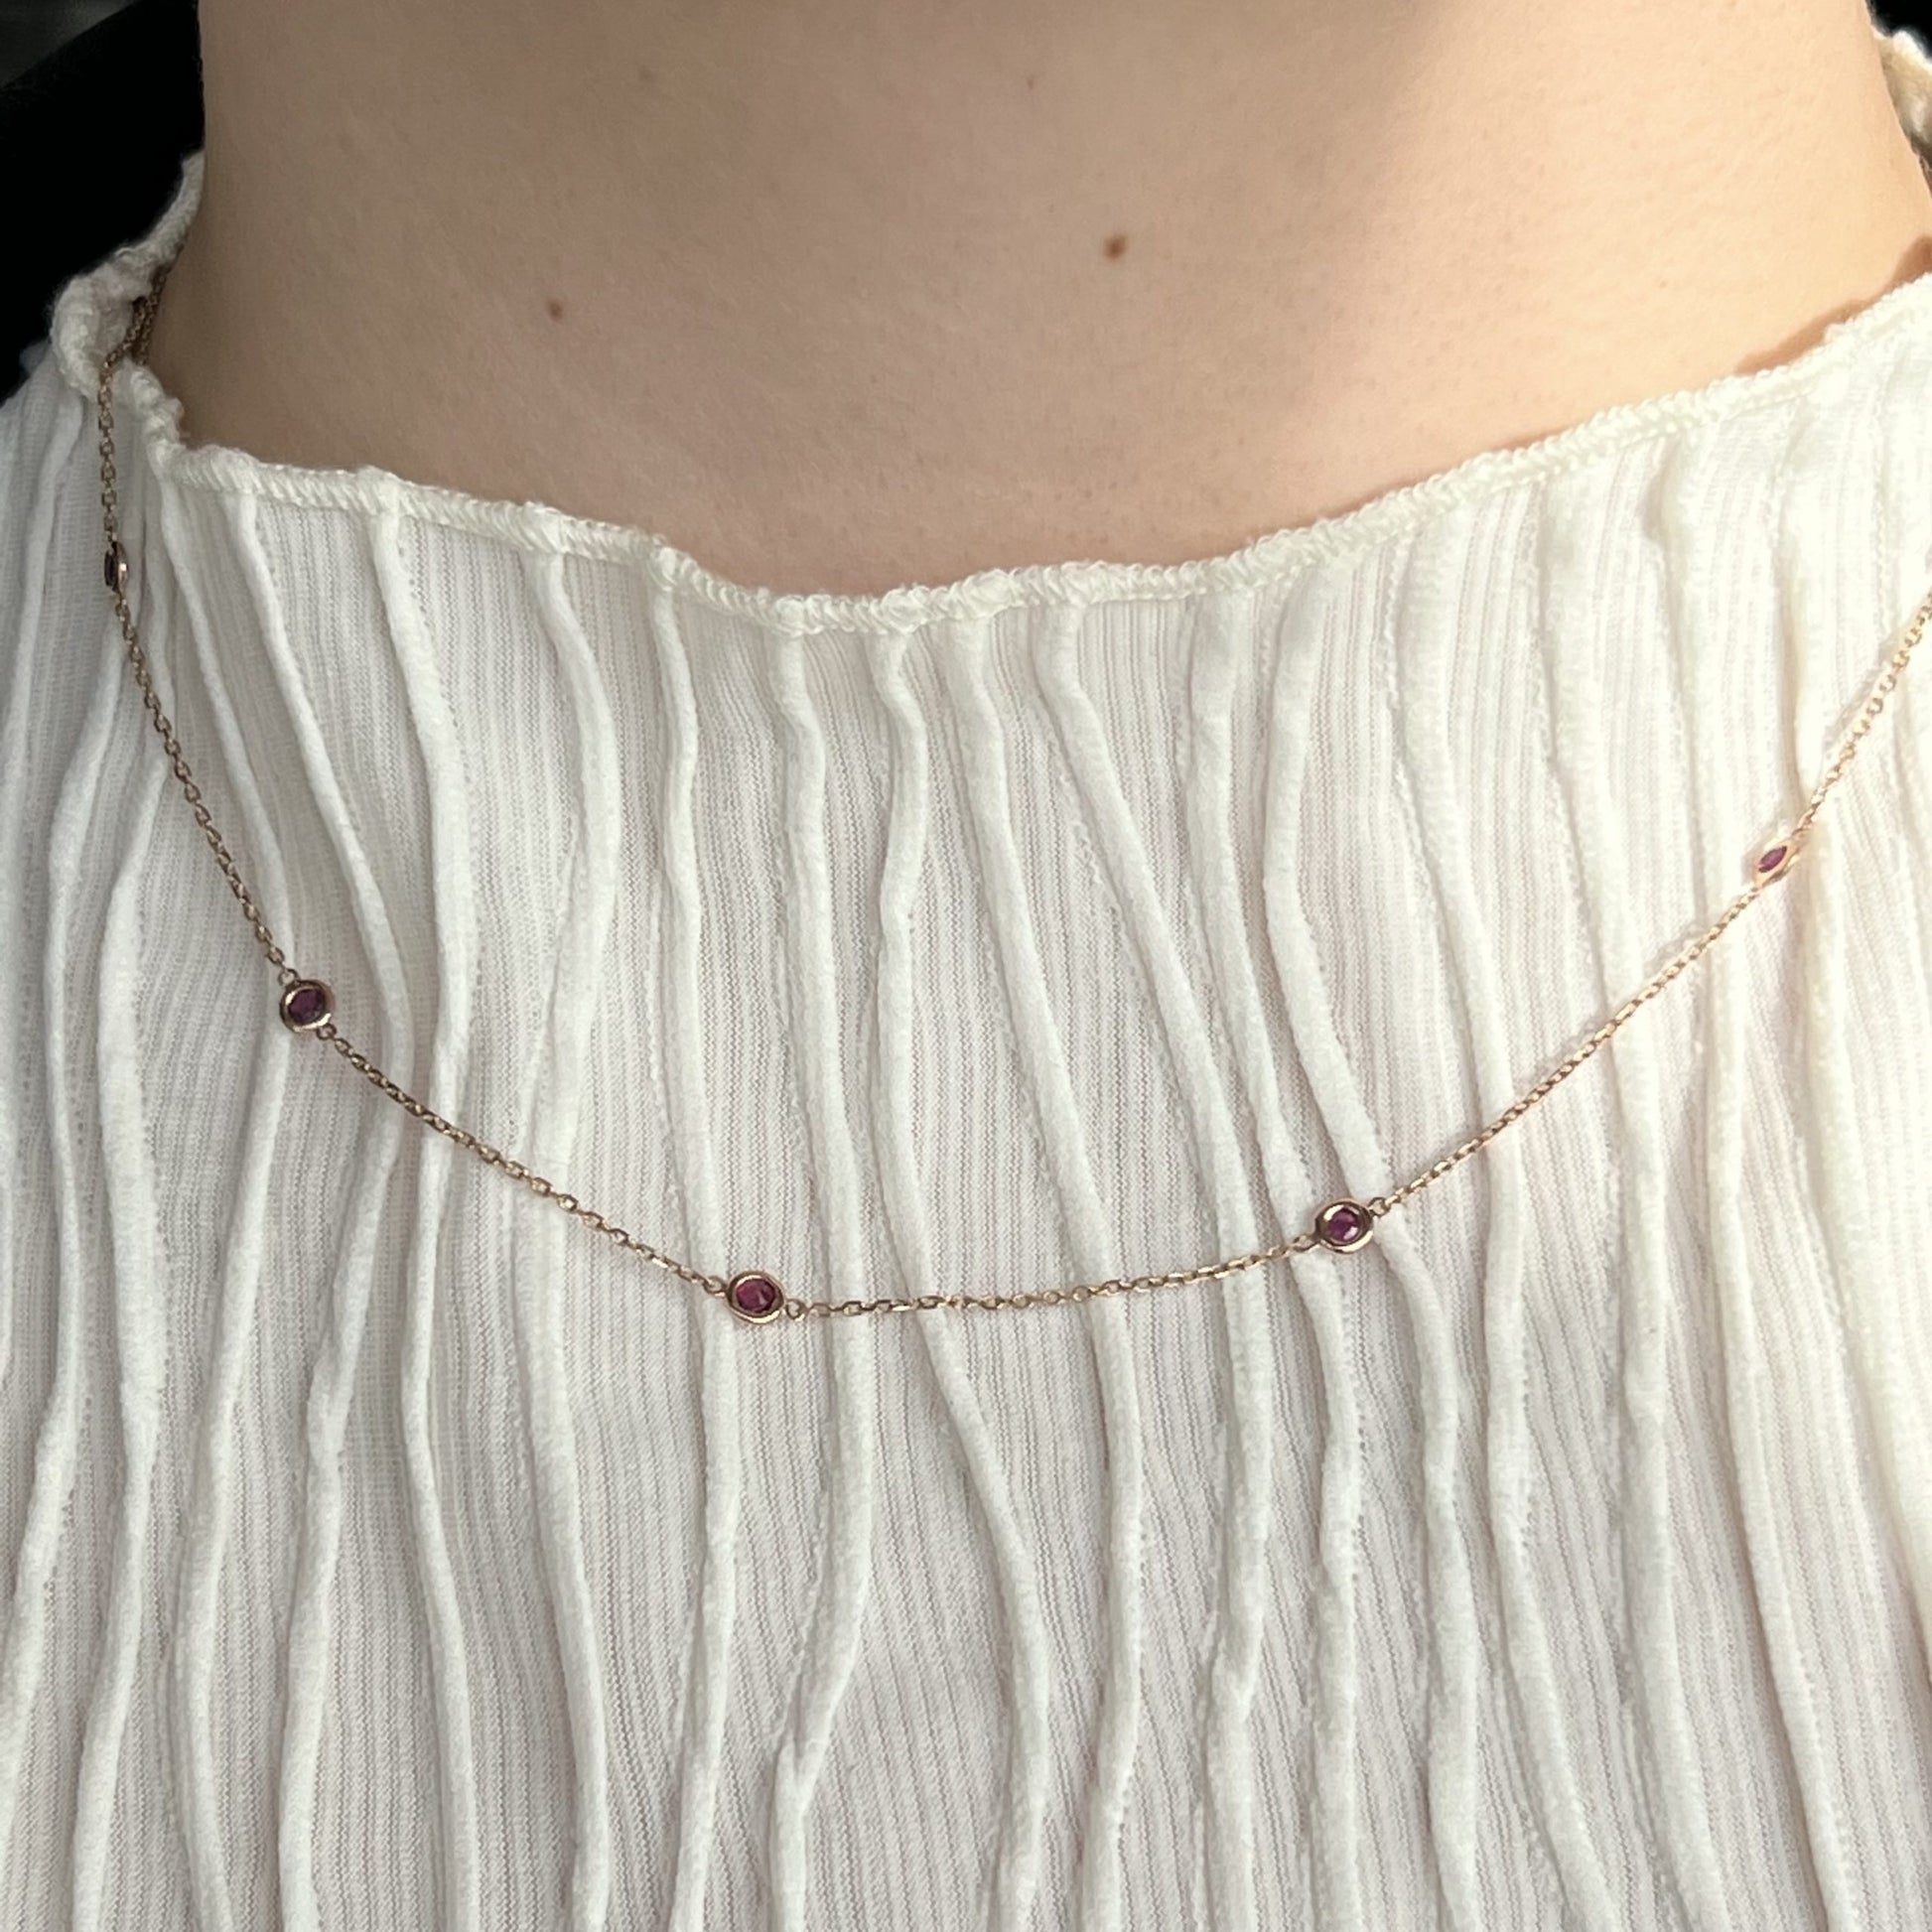 Bezel Set Ruby Chain Necklace in 14k Rose Gold